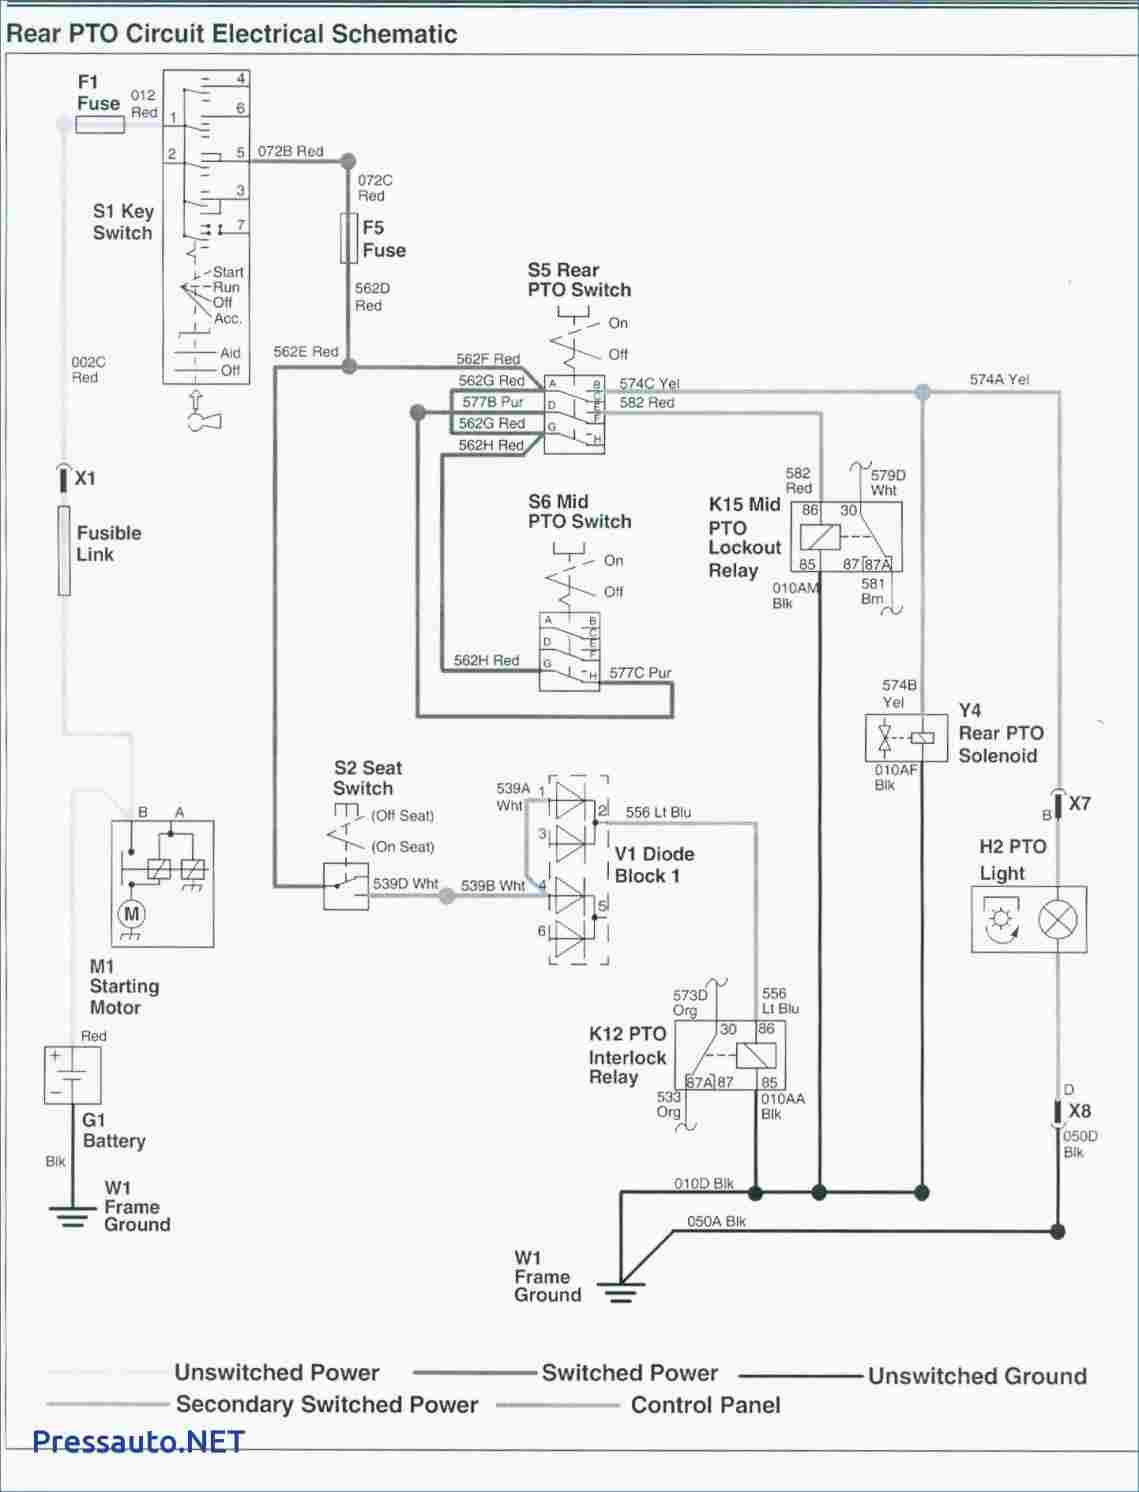 Switch-Wiring-Diagram-Wire-Center-Urhposcaribeco-Best-Of-Problem - Pto Switch Wiring Diagram